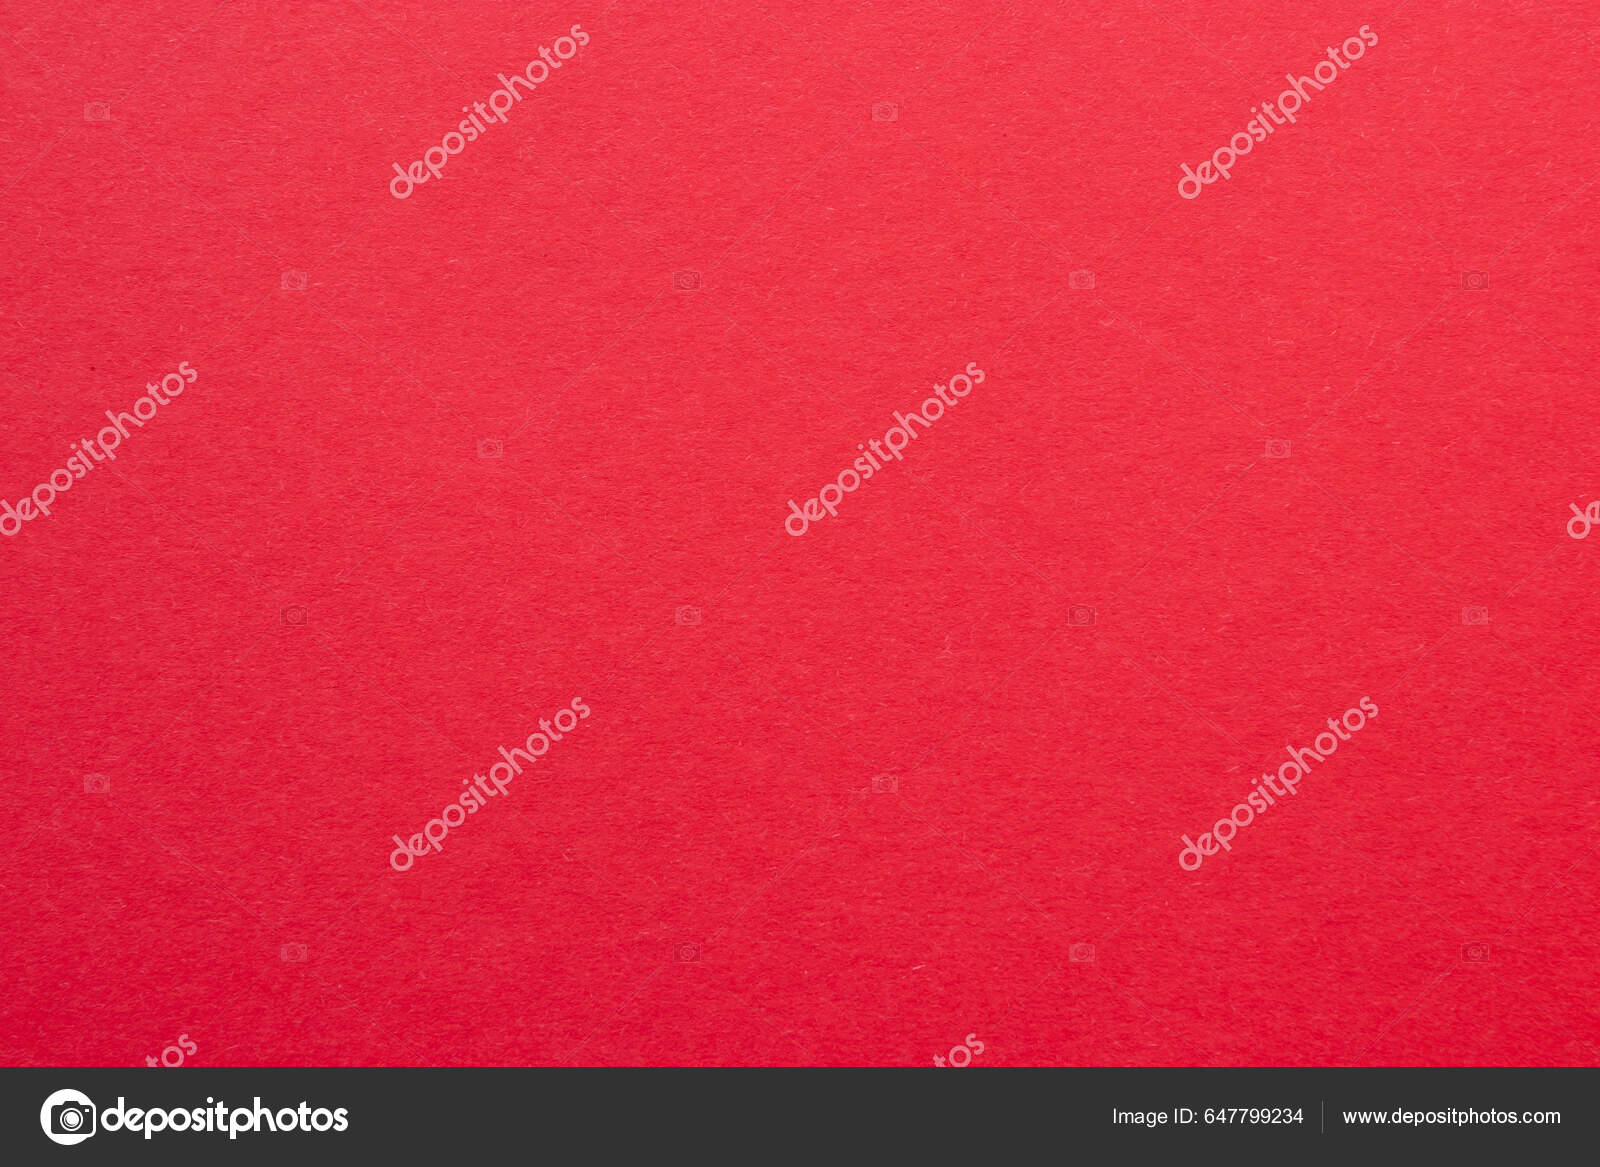 Tulip Permanent Fabric Dye Bright Red – Tulip Color Crafts